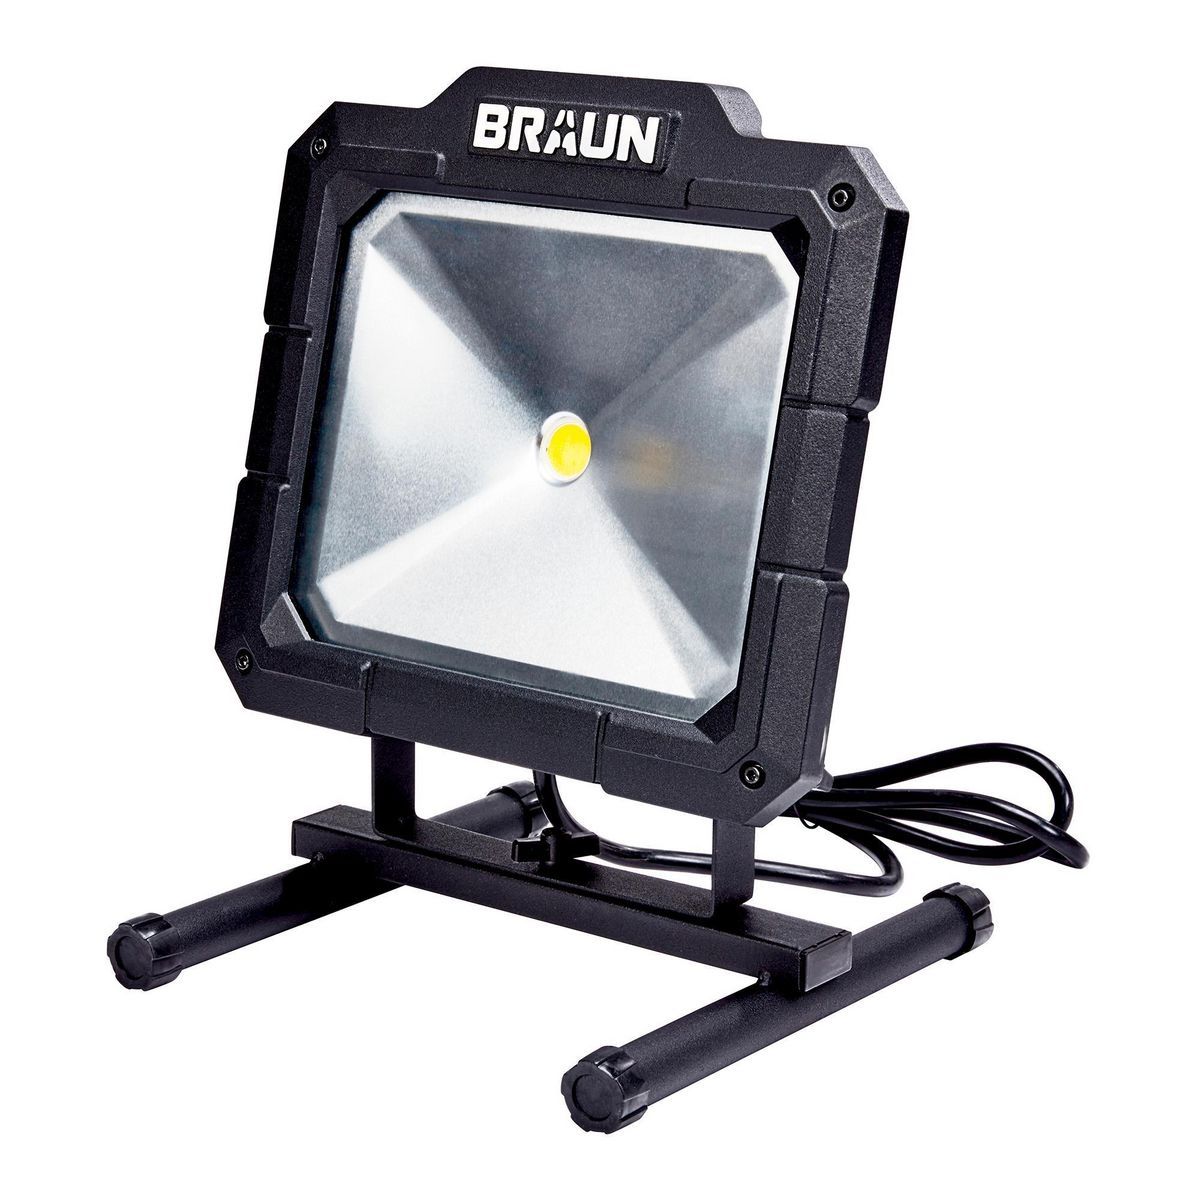 BRAUN 5000 Lumen LED Linkable Work Light